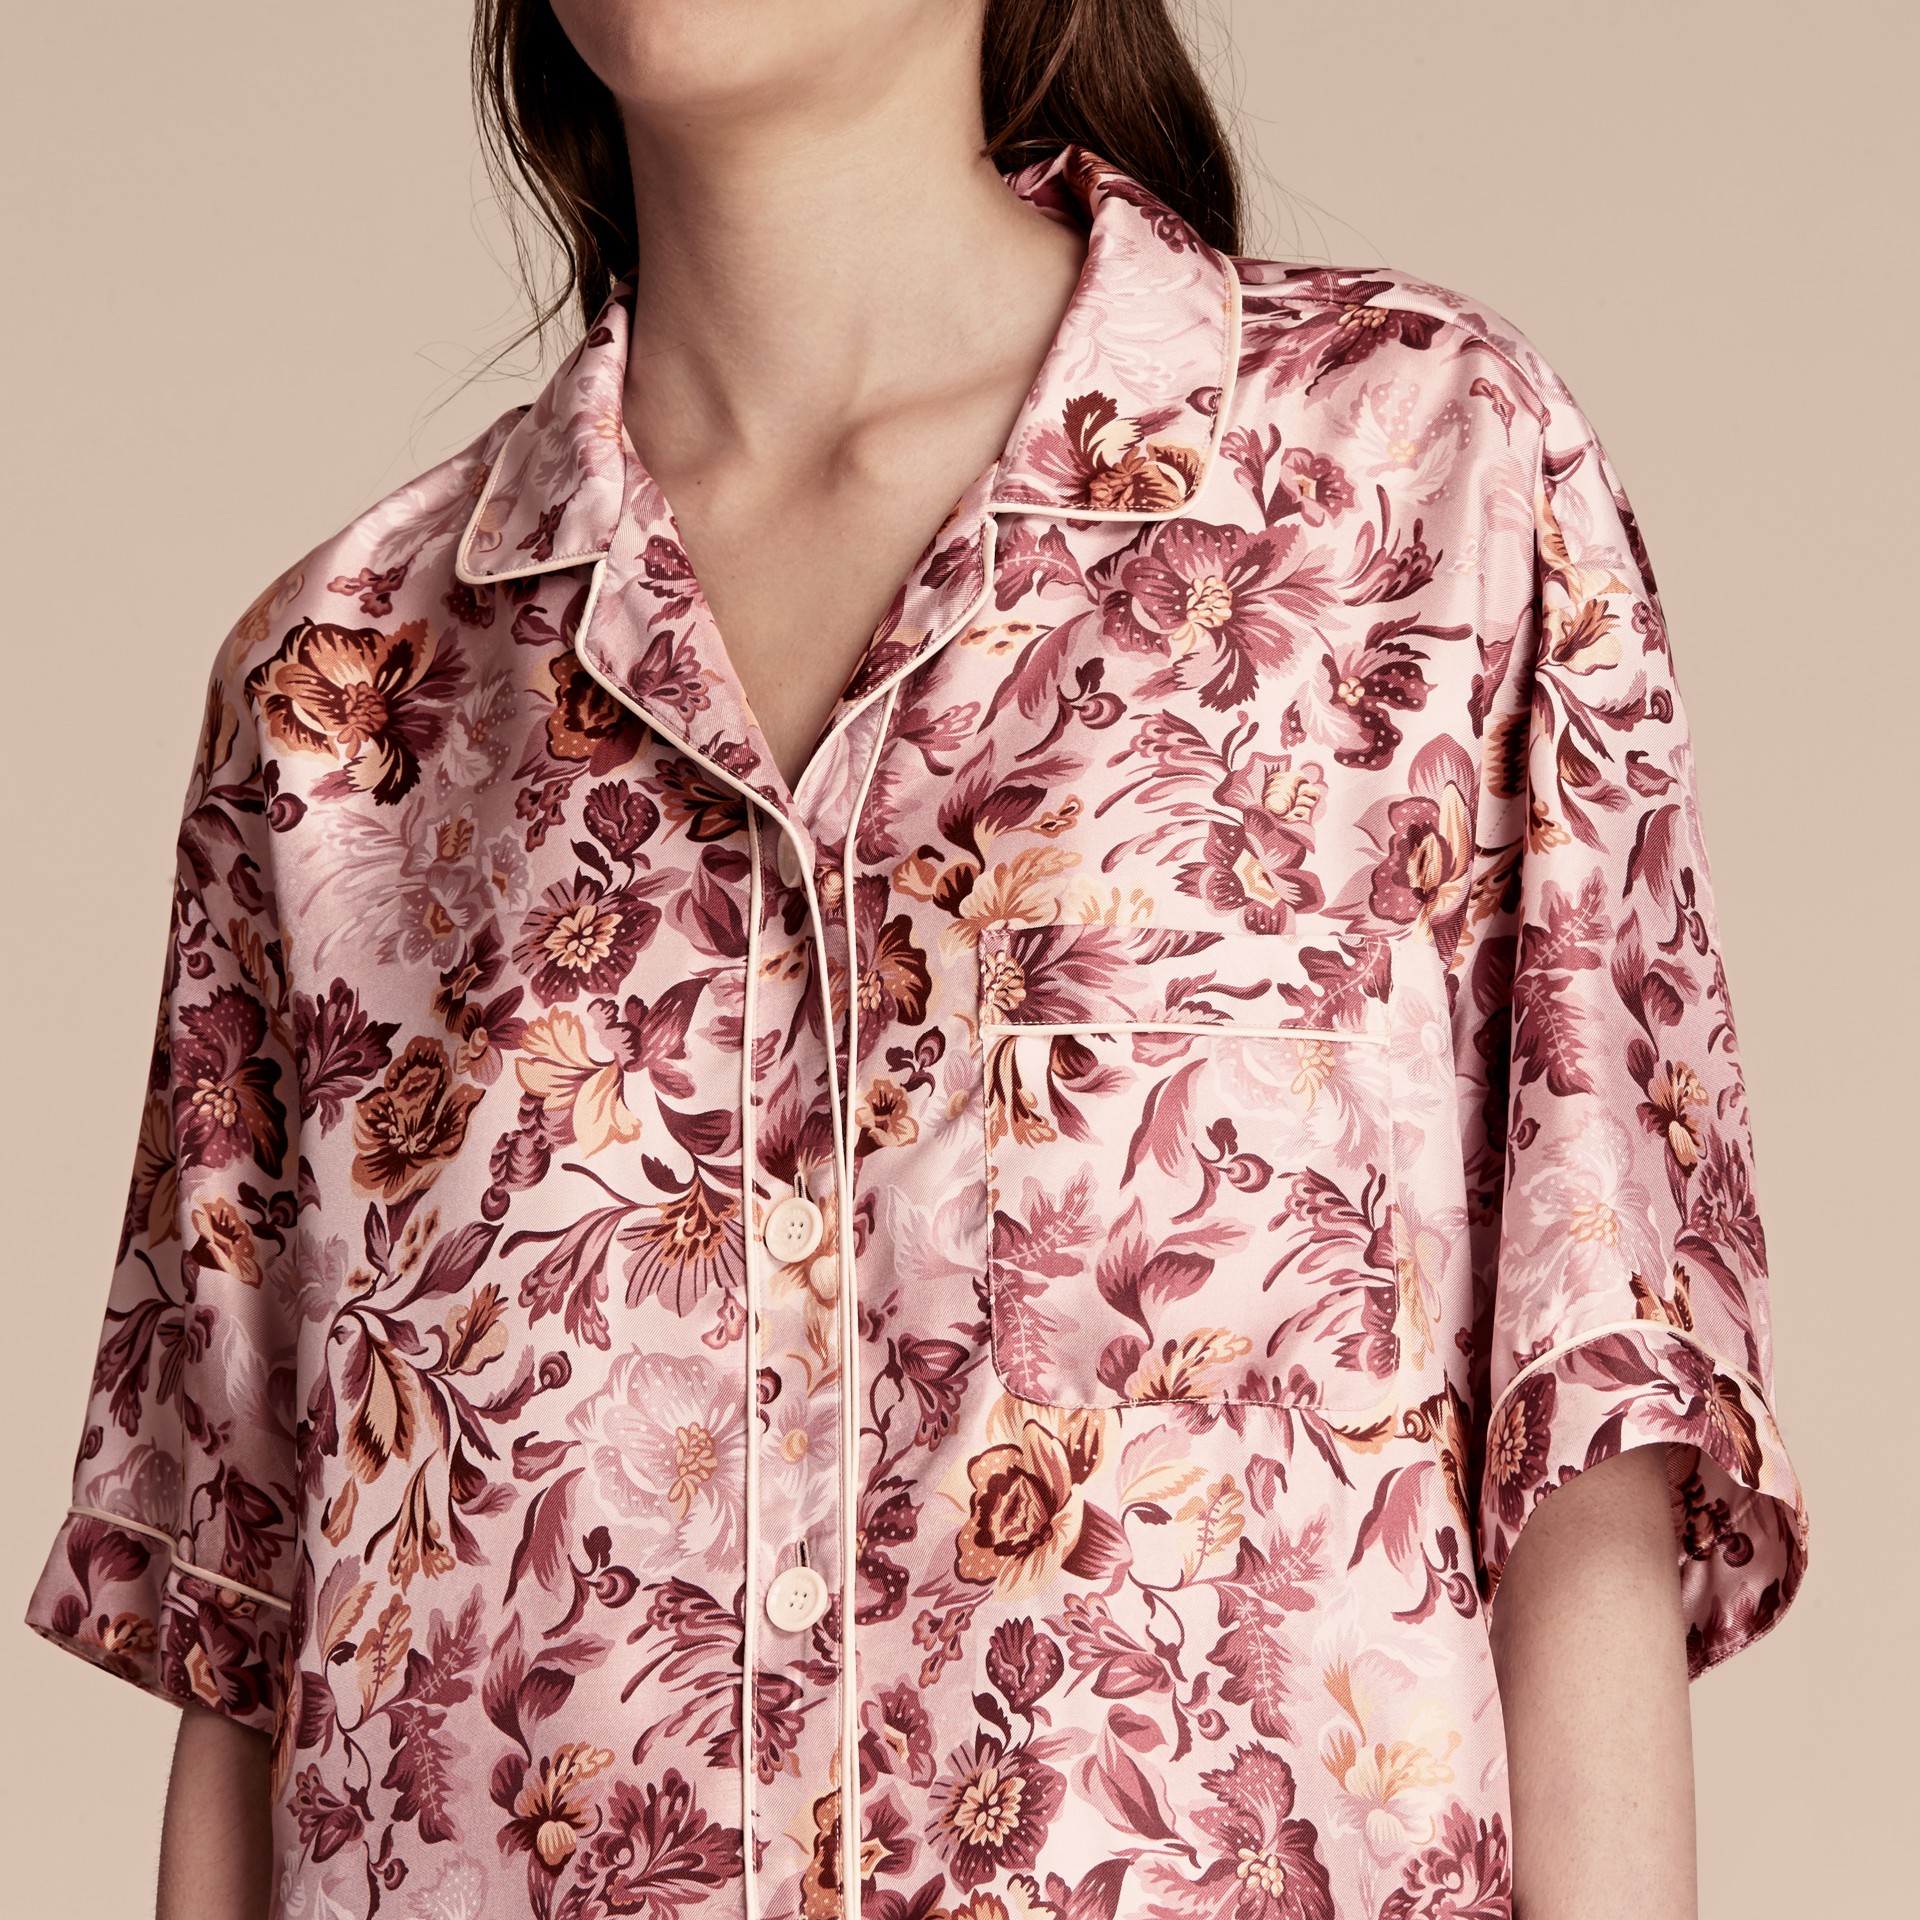 Short-sleeved Floral Print Silk Pyjama-style Shirt in Pink Heather ...